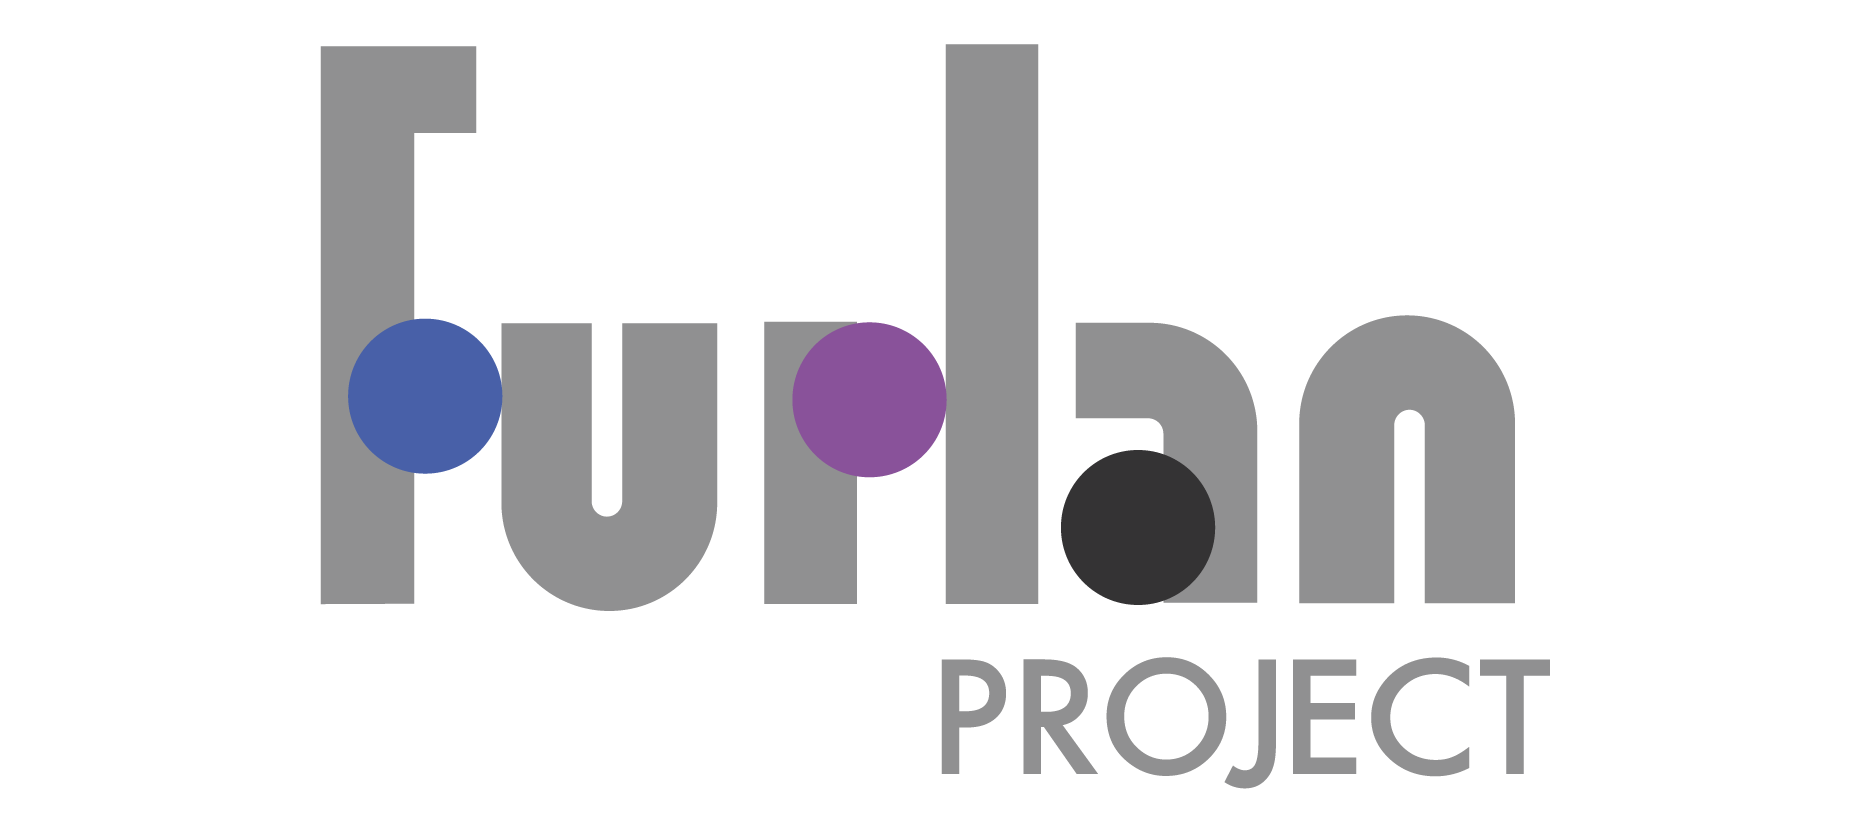 FurlanProject_LogoSponsor